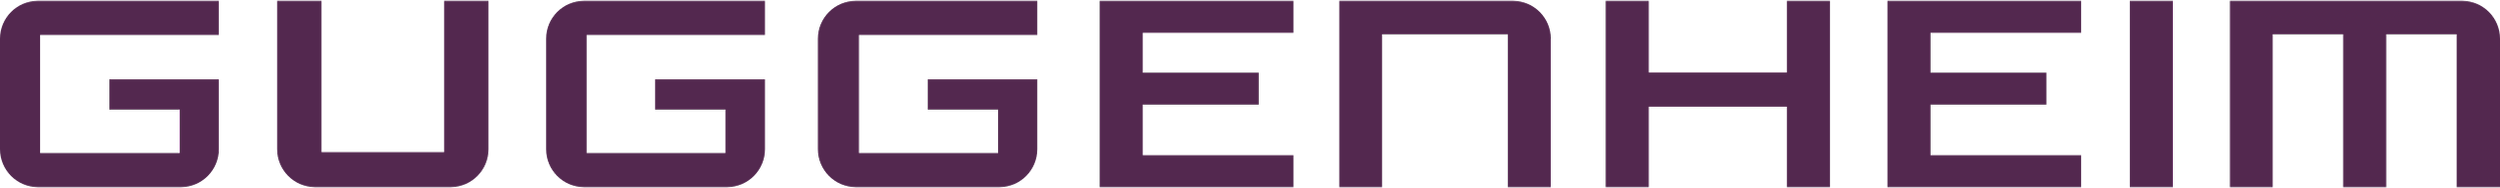 Guggenheim_Partners_Logo.svg.png